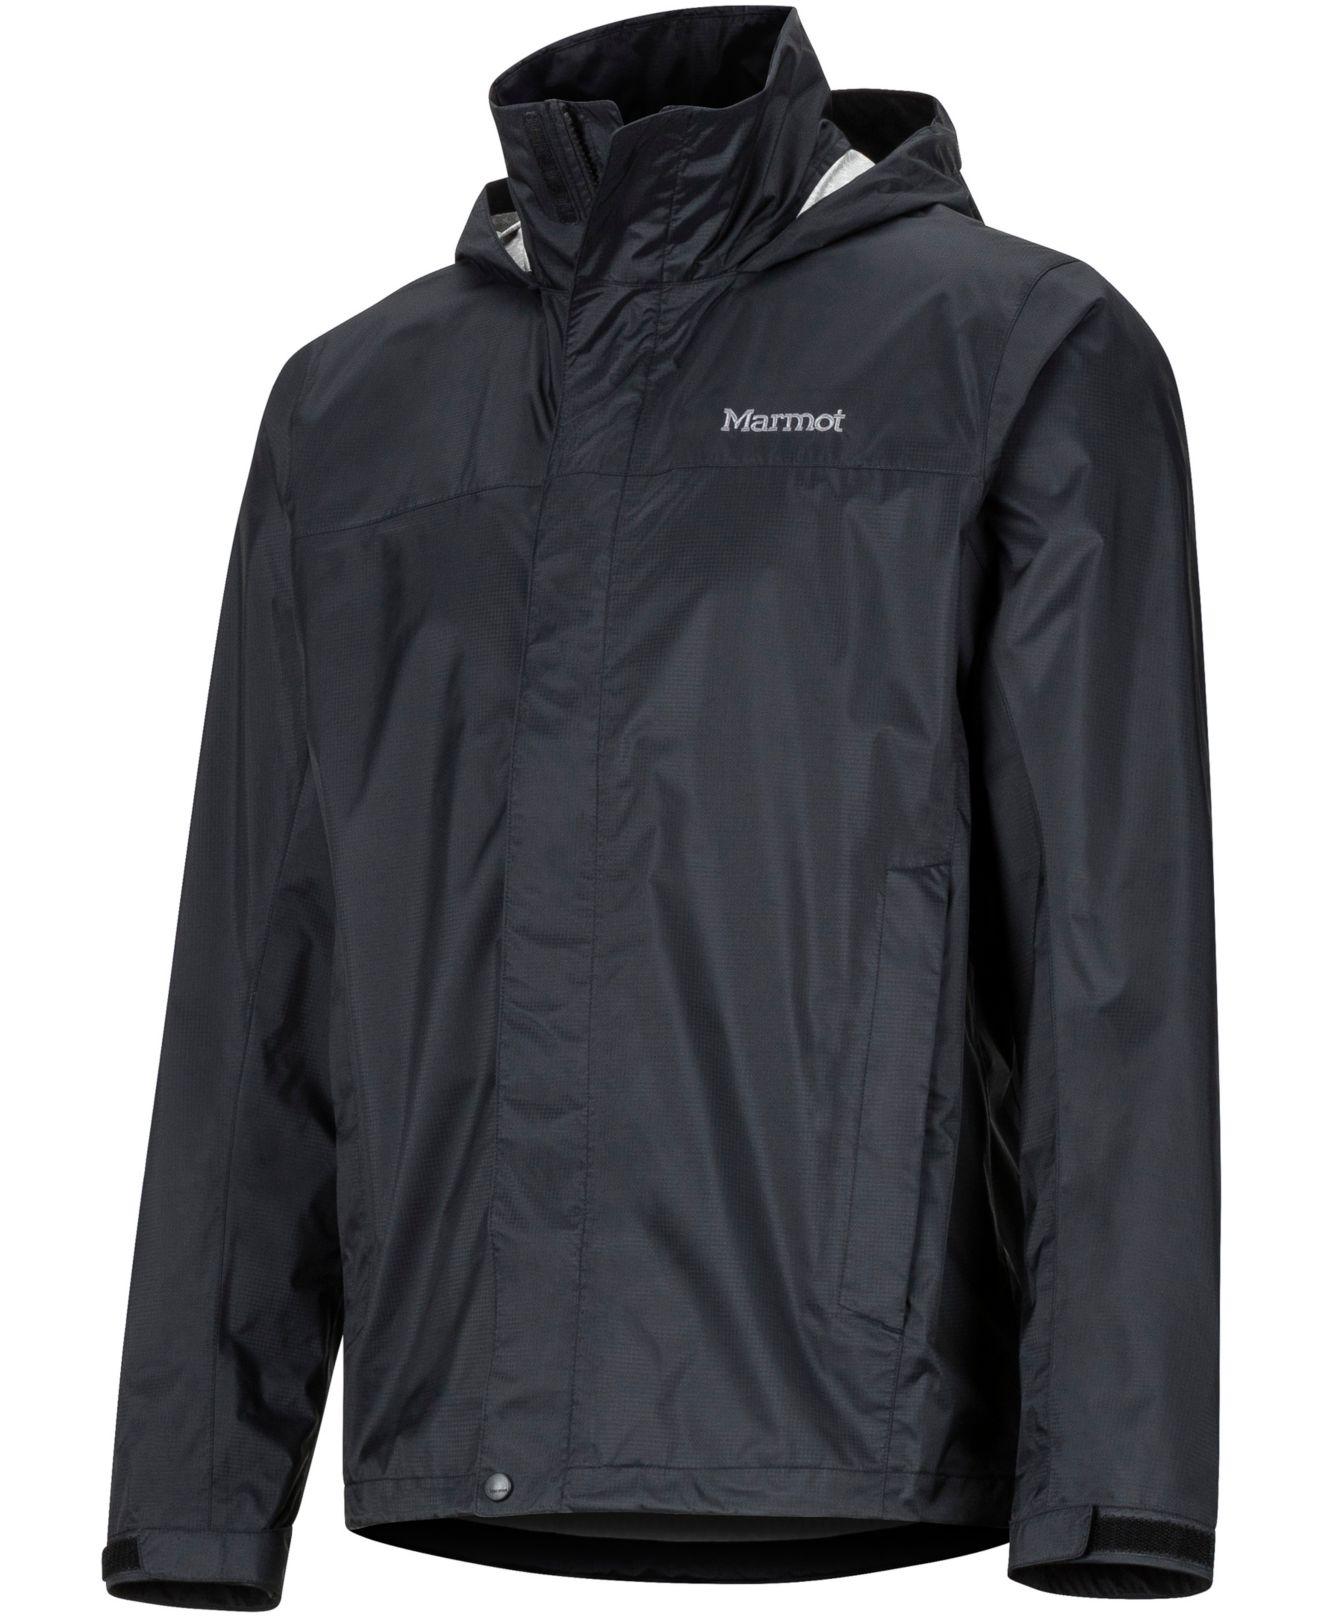 Marmot Synthetic Precip Eco Rain Jacket in Black for Men - Lyst